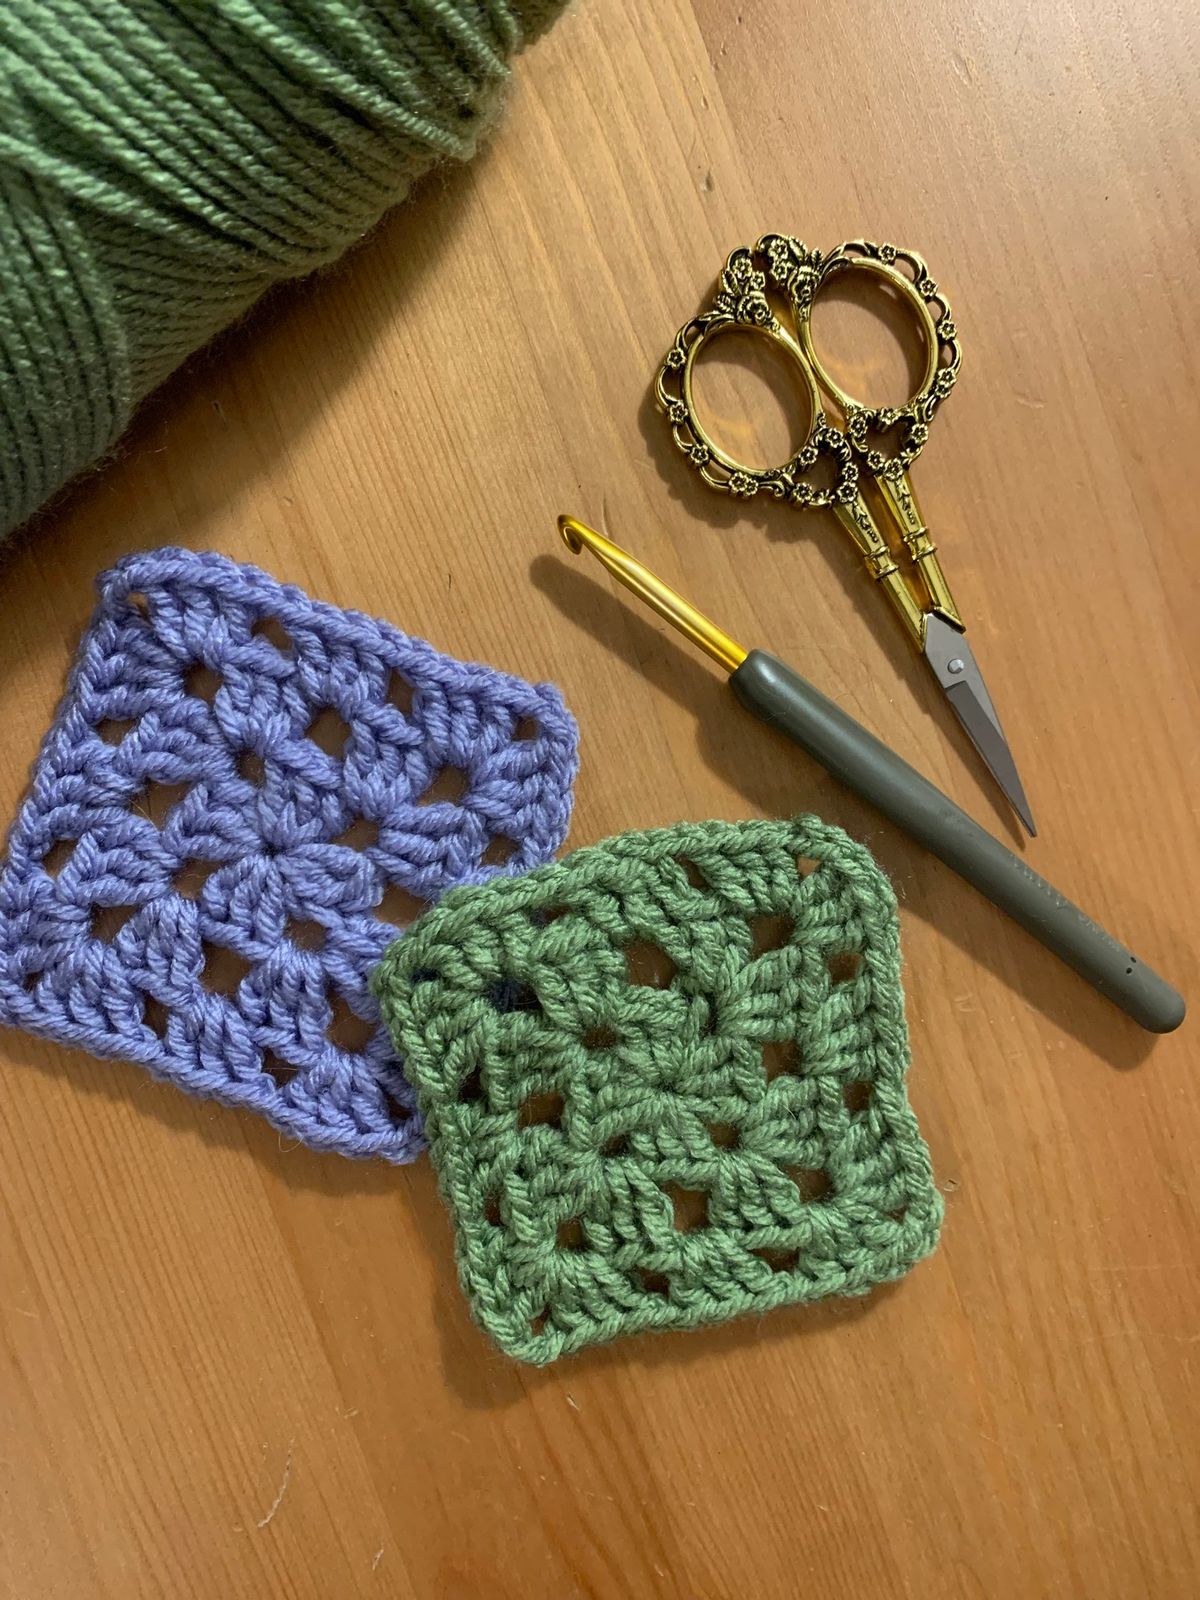 Crochet Granny Squares for beginners